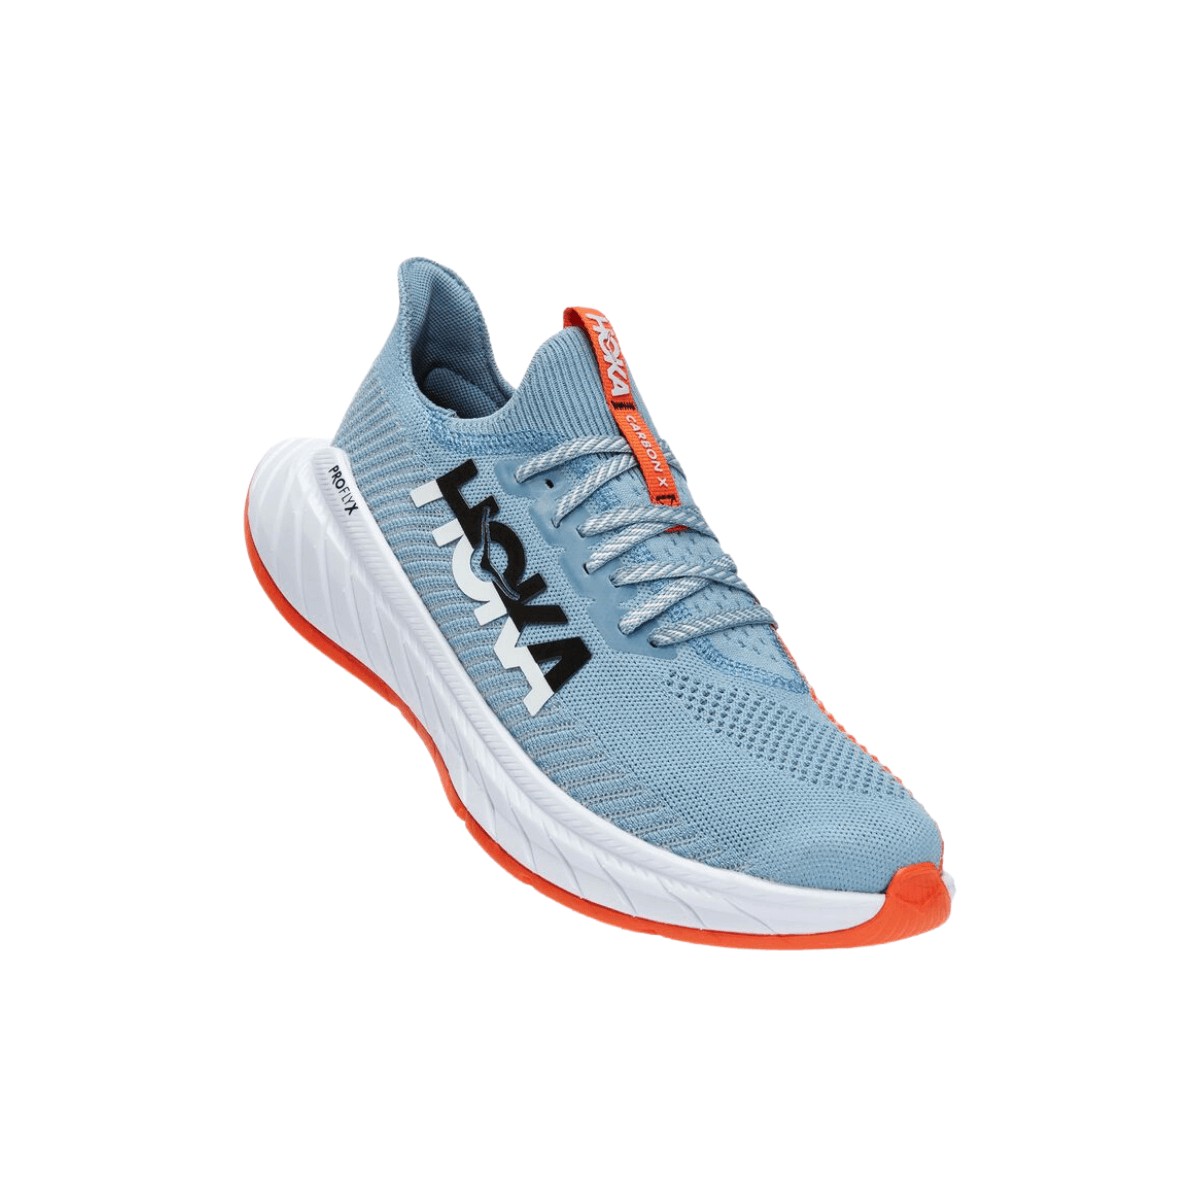 Hoka One One Carbon X Blue Orange Running Shoes AW22, Size EU 42